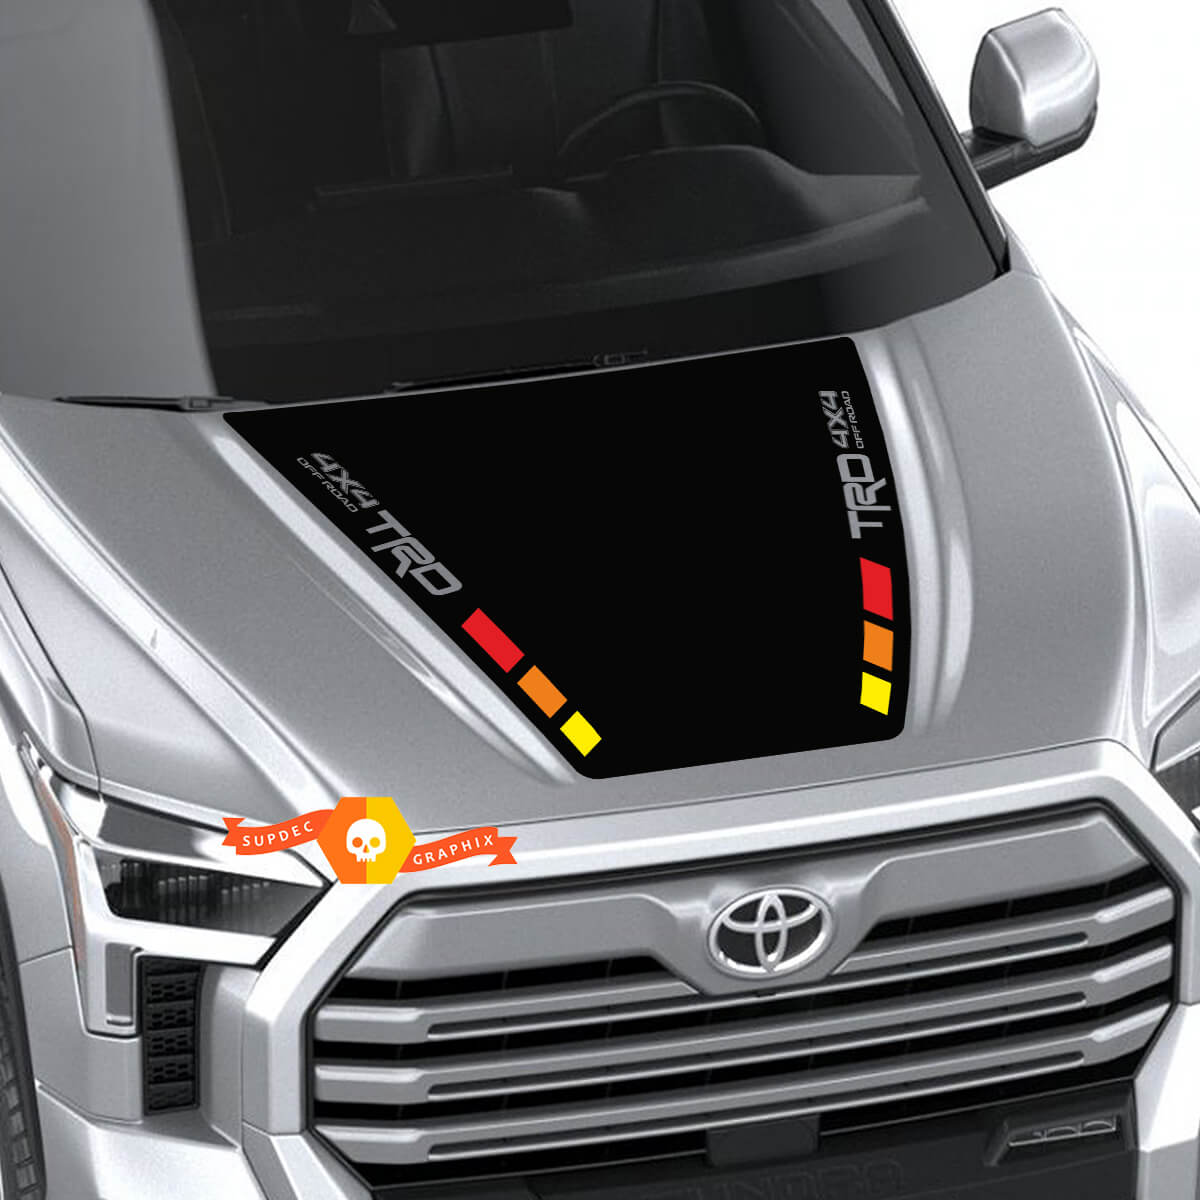 New Toyota Tundra 2022 Hood TRD SR5 Off Road Sport Vintage Stripes Wrap Decal Sticker Graphics SupDec Design